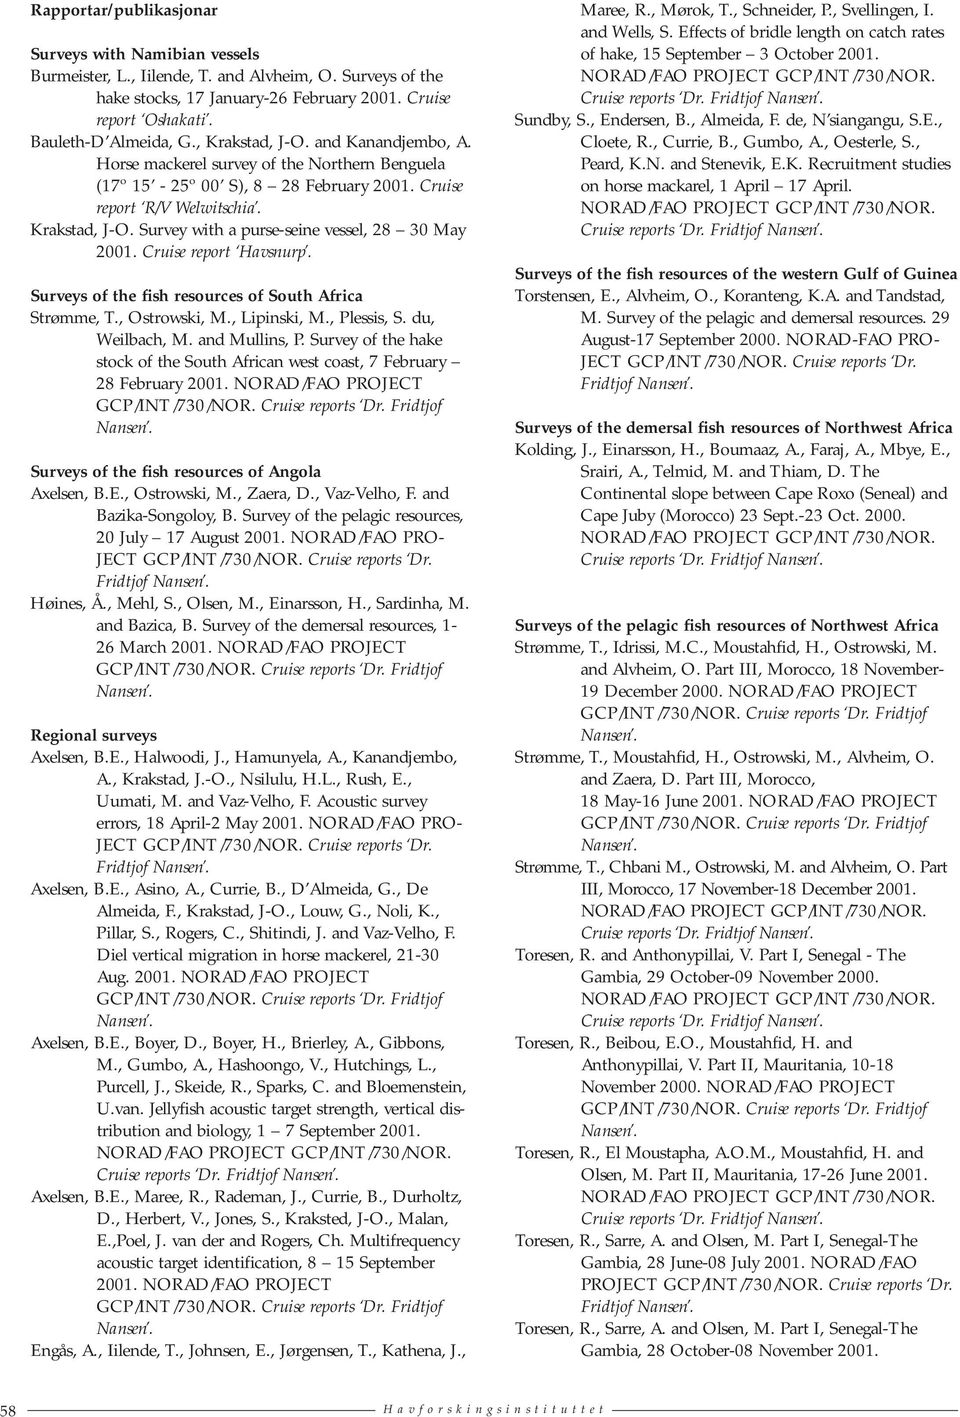 Surveys of the fish resources of South Africa Strømme, T., Ostrowski, M., Lipinski, M., Plessis, S. du, Weilbach, M. and Mullins, P.